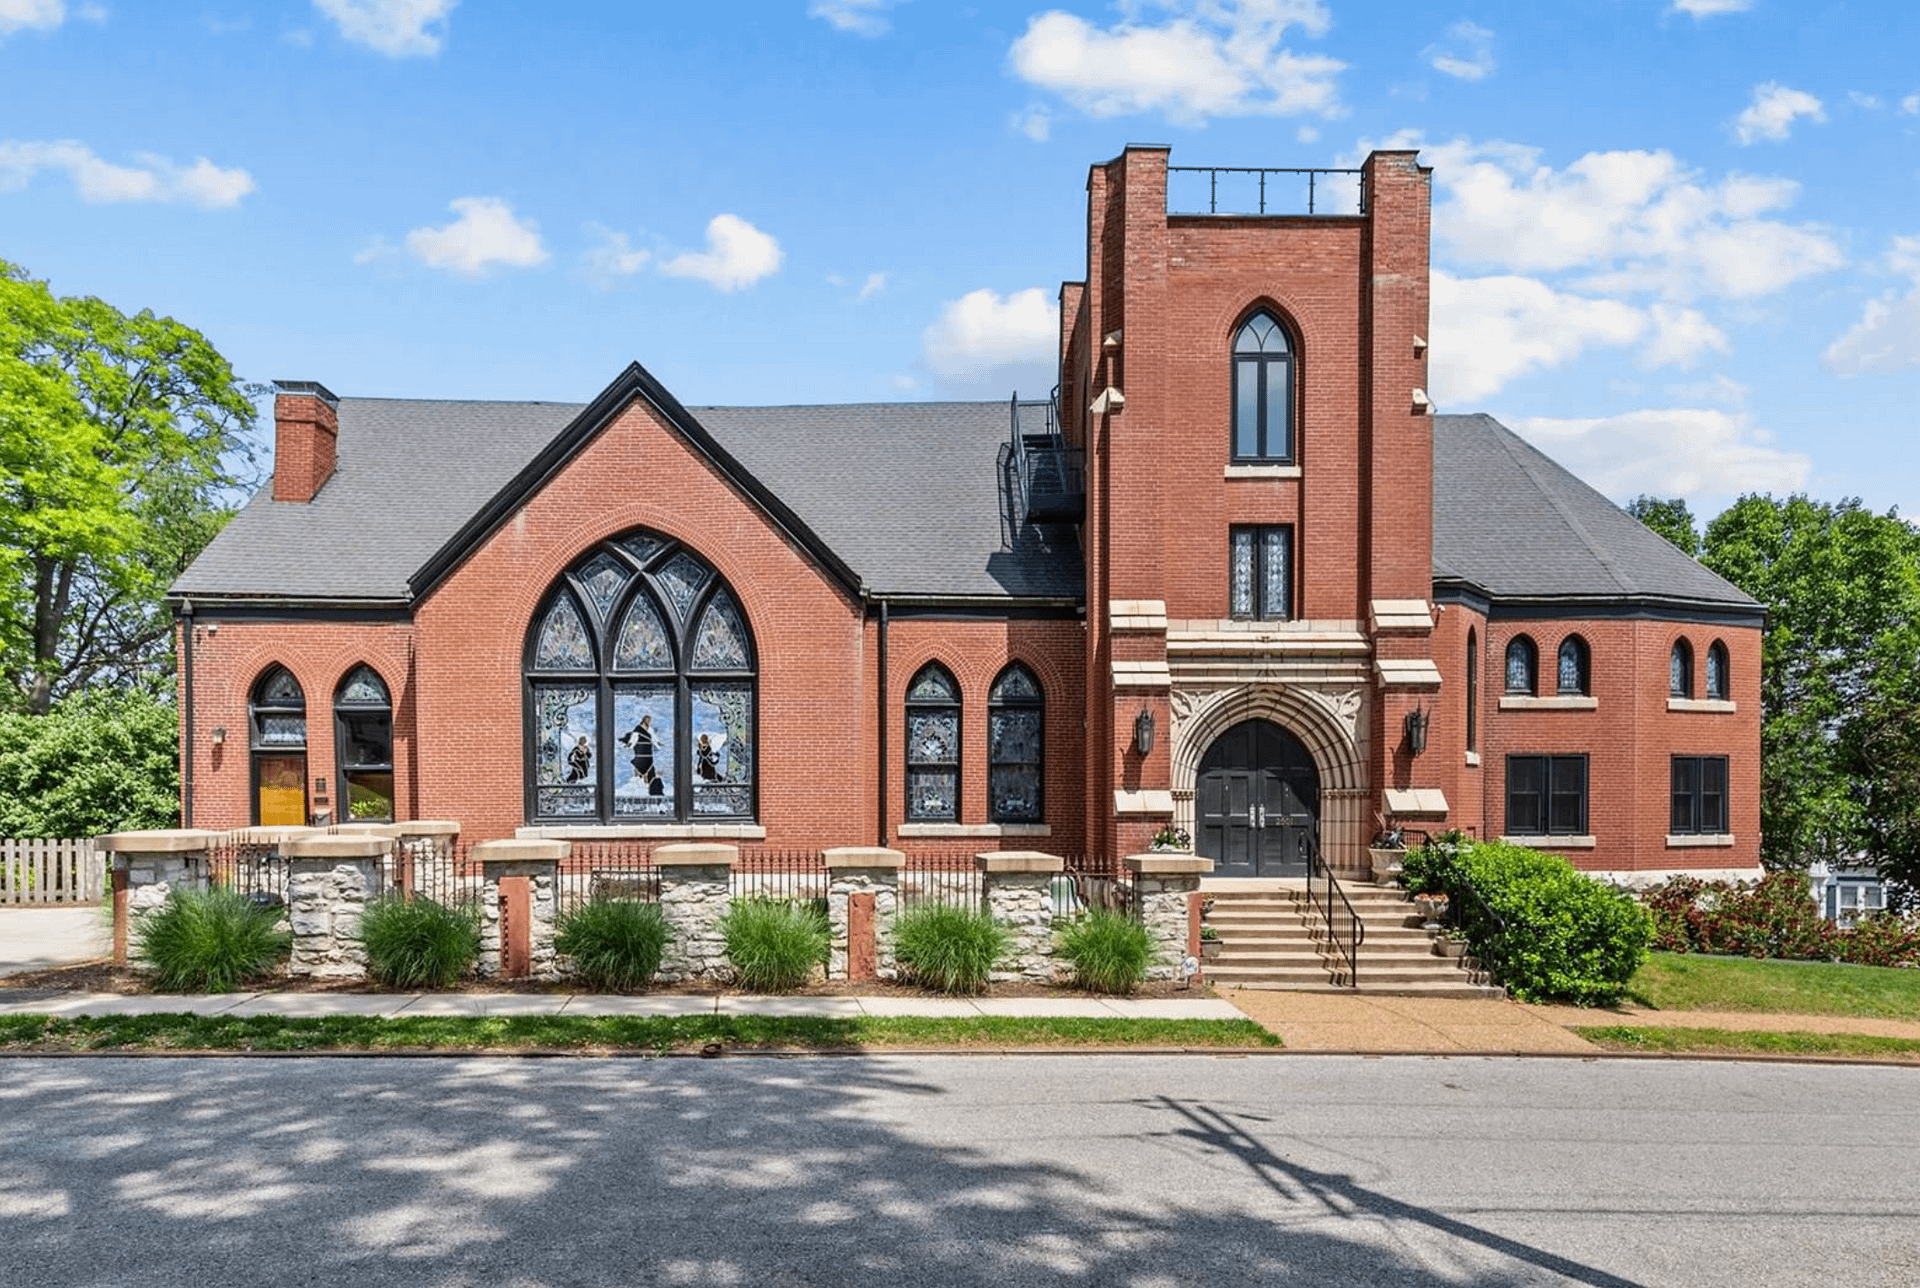 Historic Missouri Church Turned Luxury Home (PHOTOS)